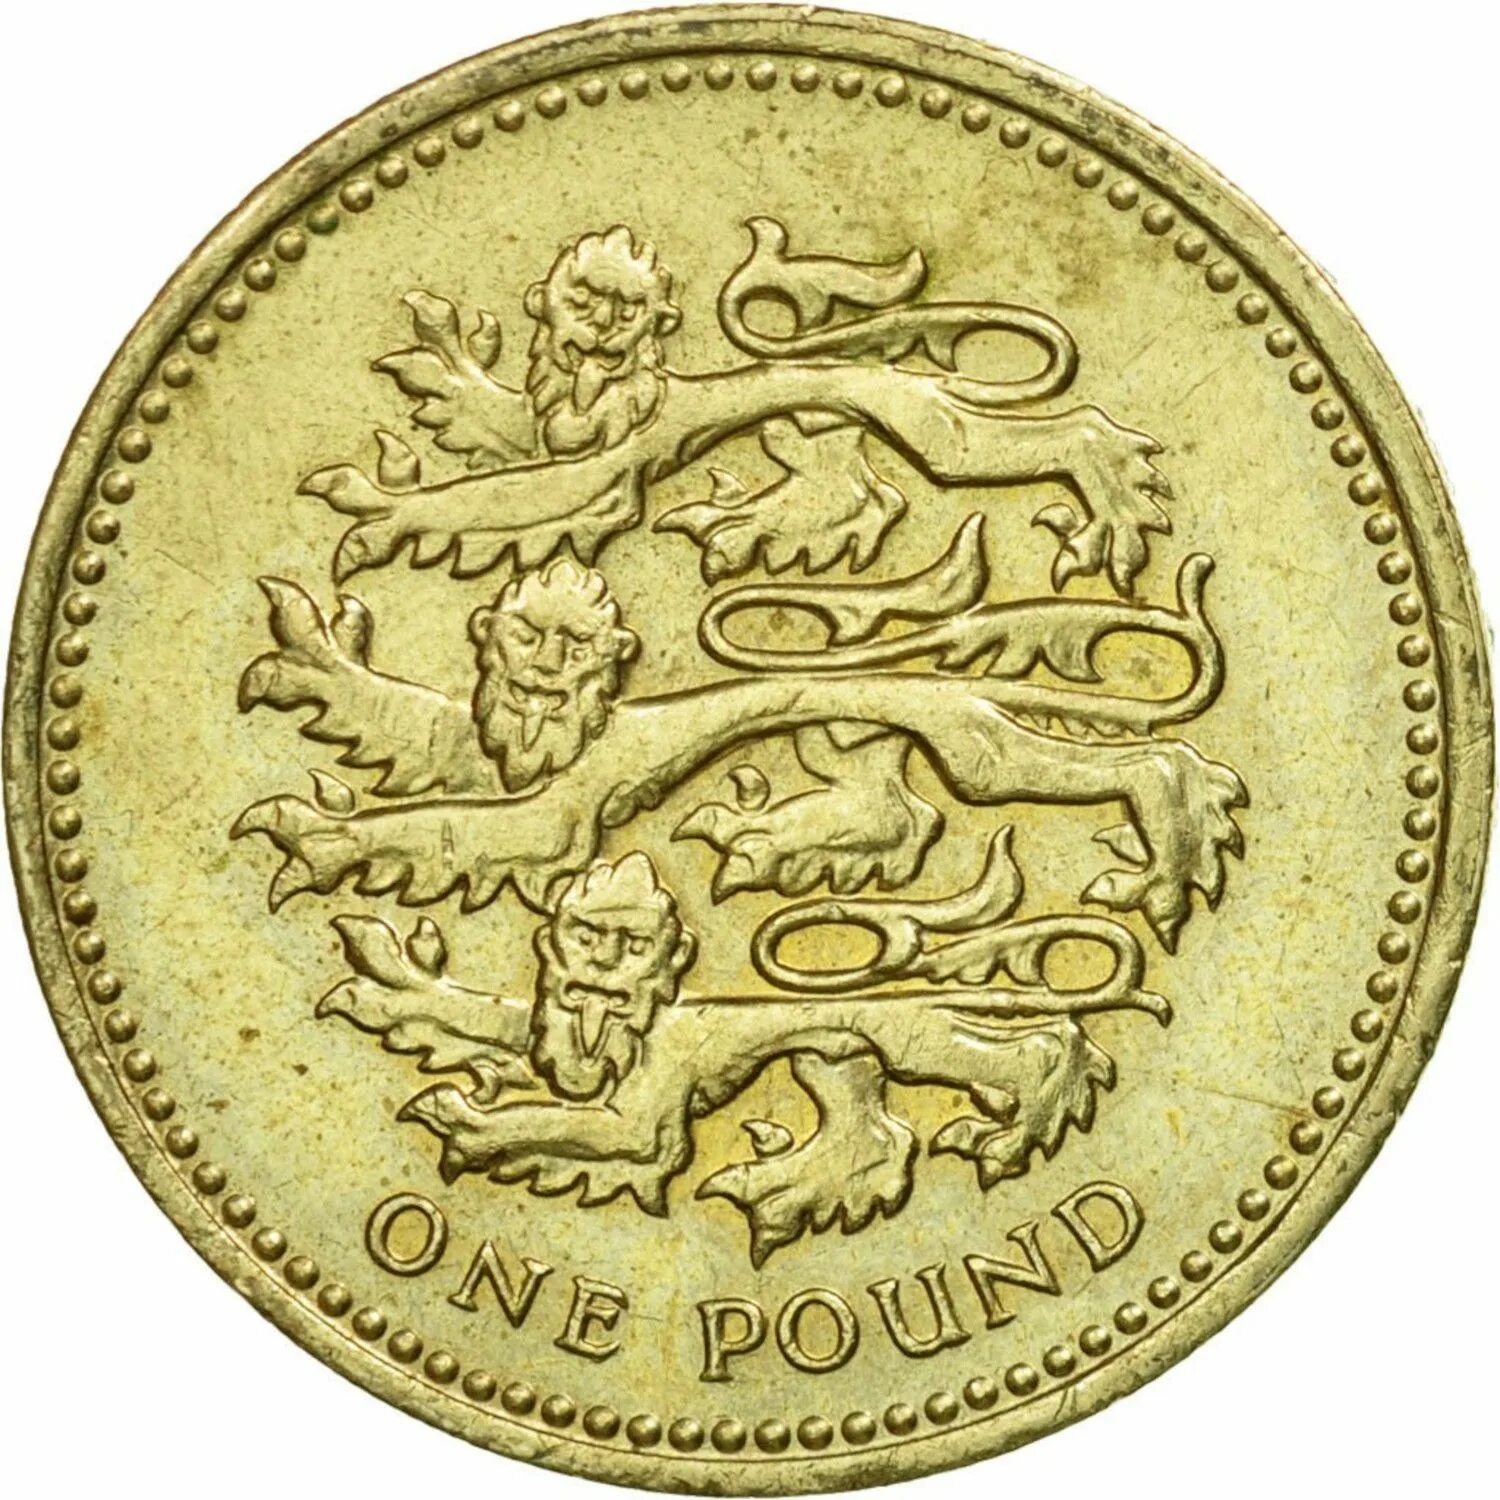 First coins. Один фунт стерлингов монеты Великобритании. Монеты Великобритании 1 фунт. На монете one pound 1997. Монета 1 Паунд.